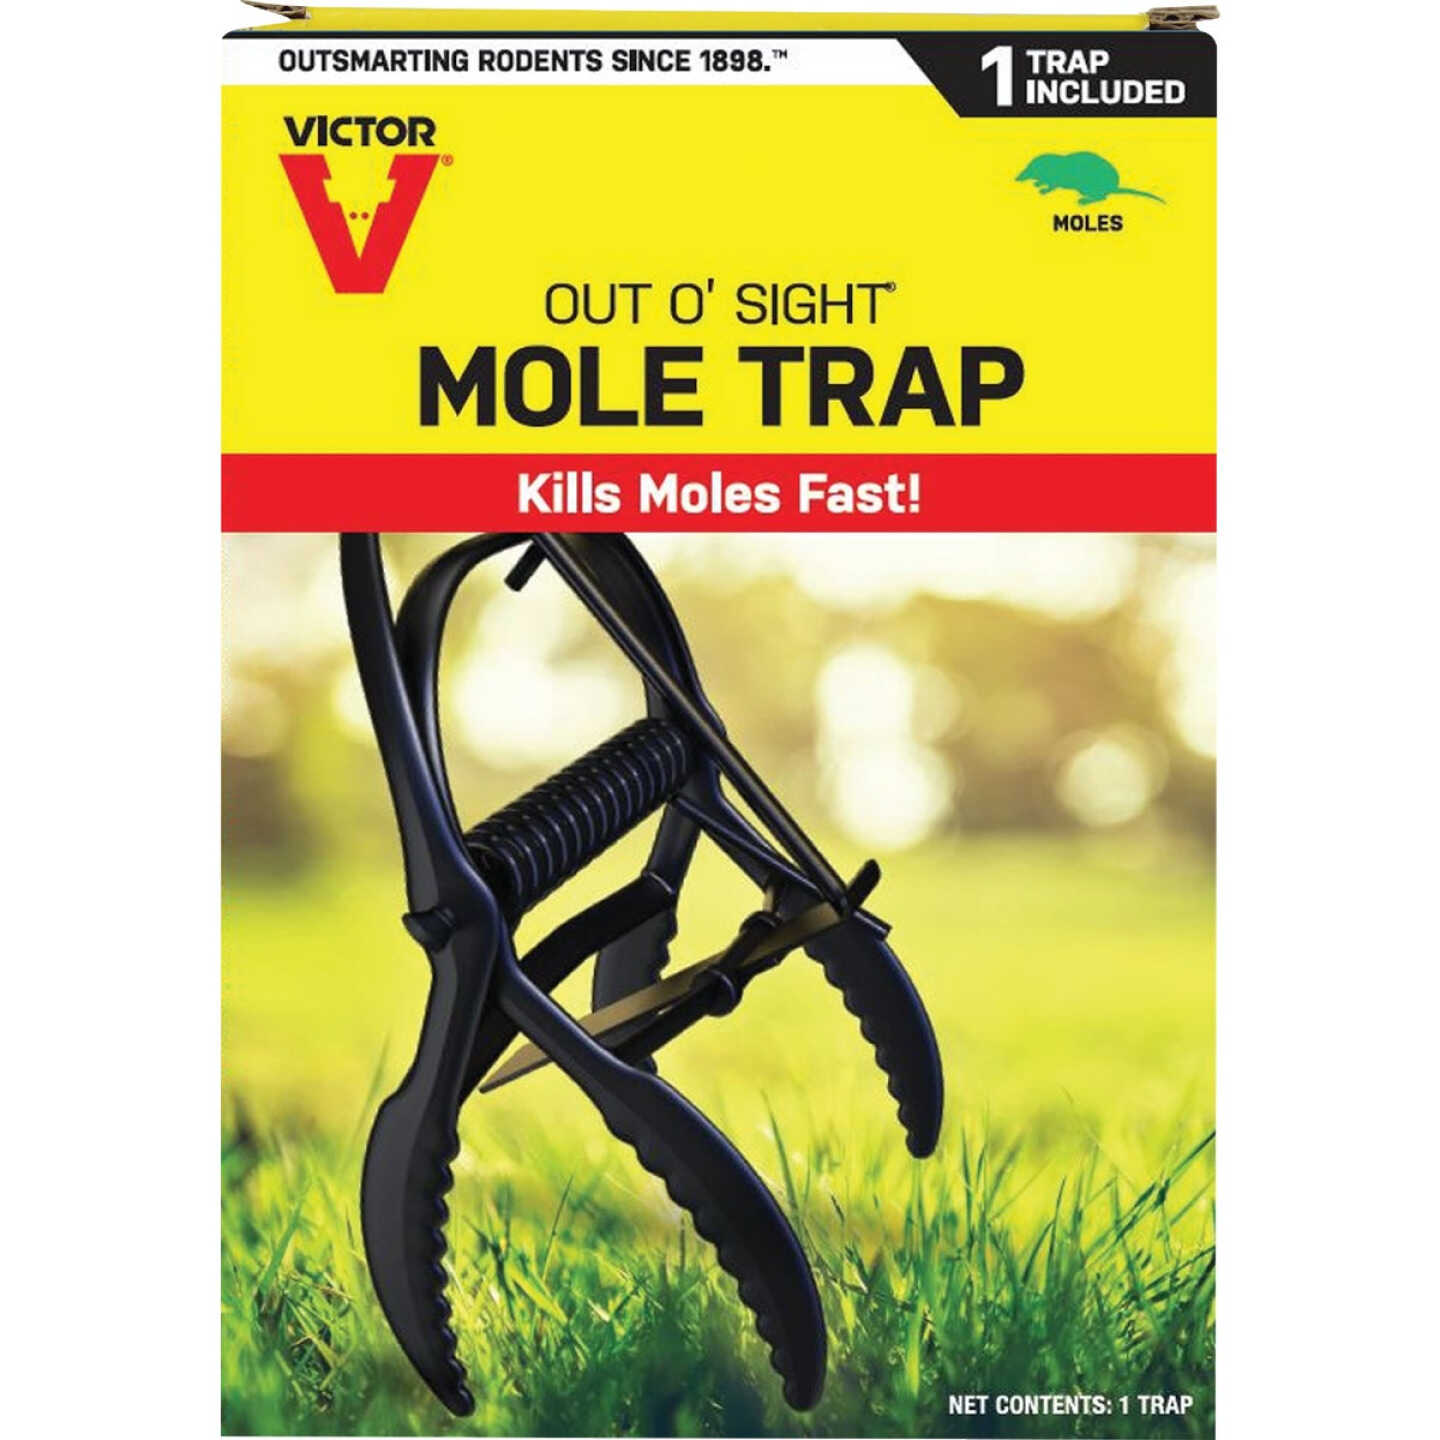  Tomcat Mole Trap, Innovative and Effective Mole